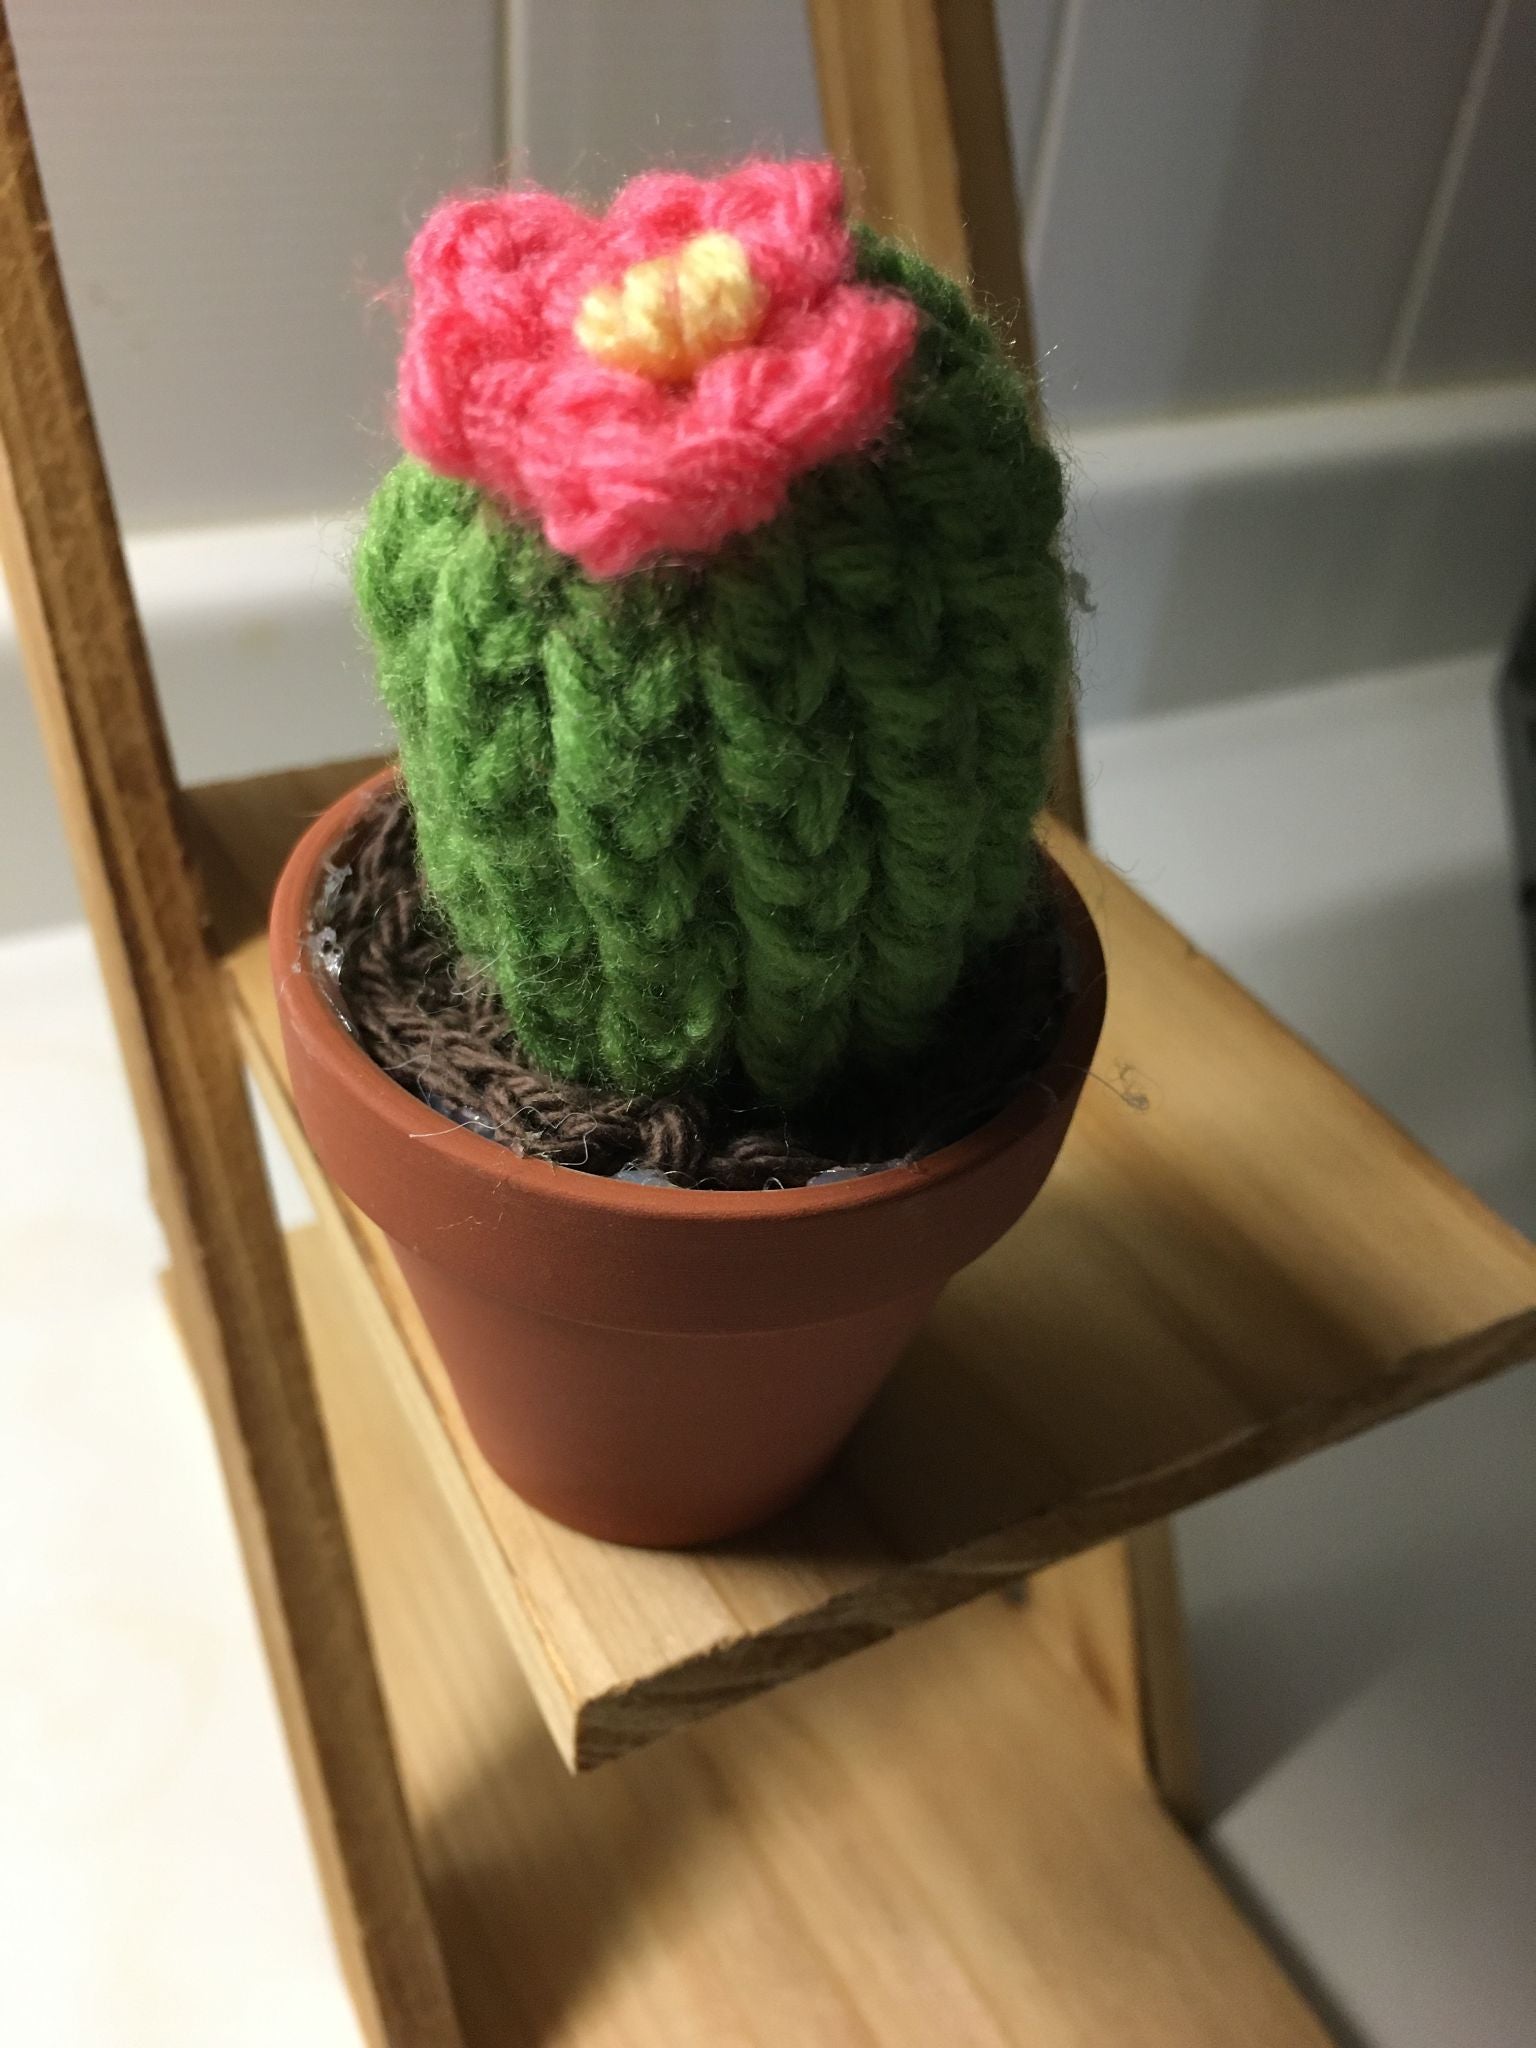 Moes knits crochet cactus - 1